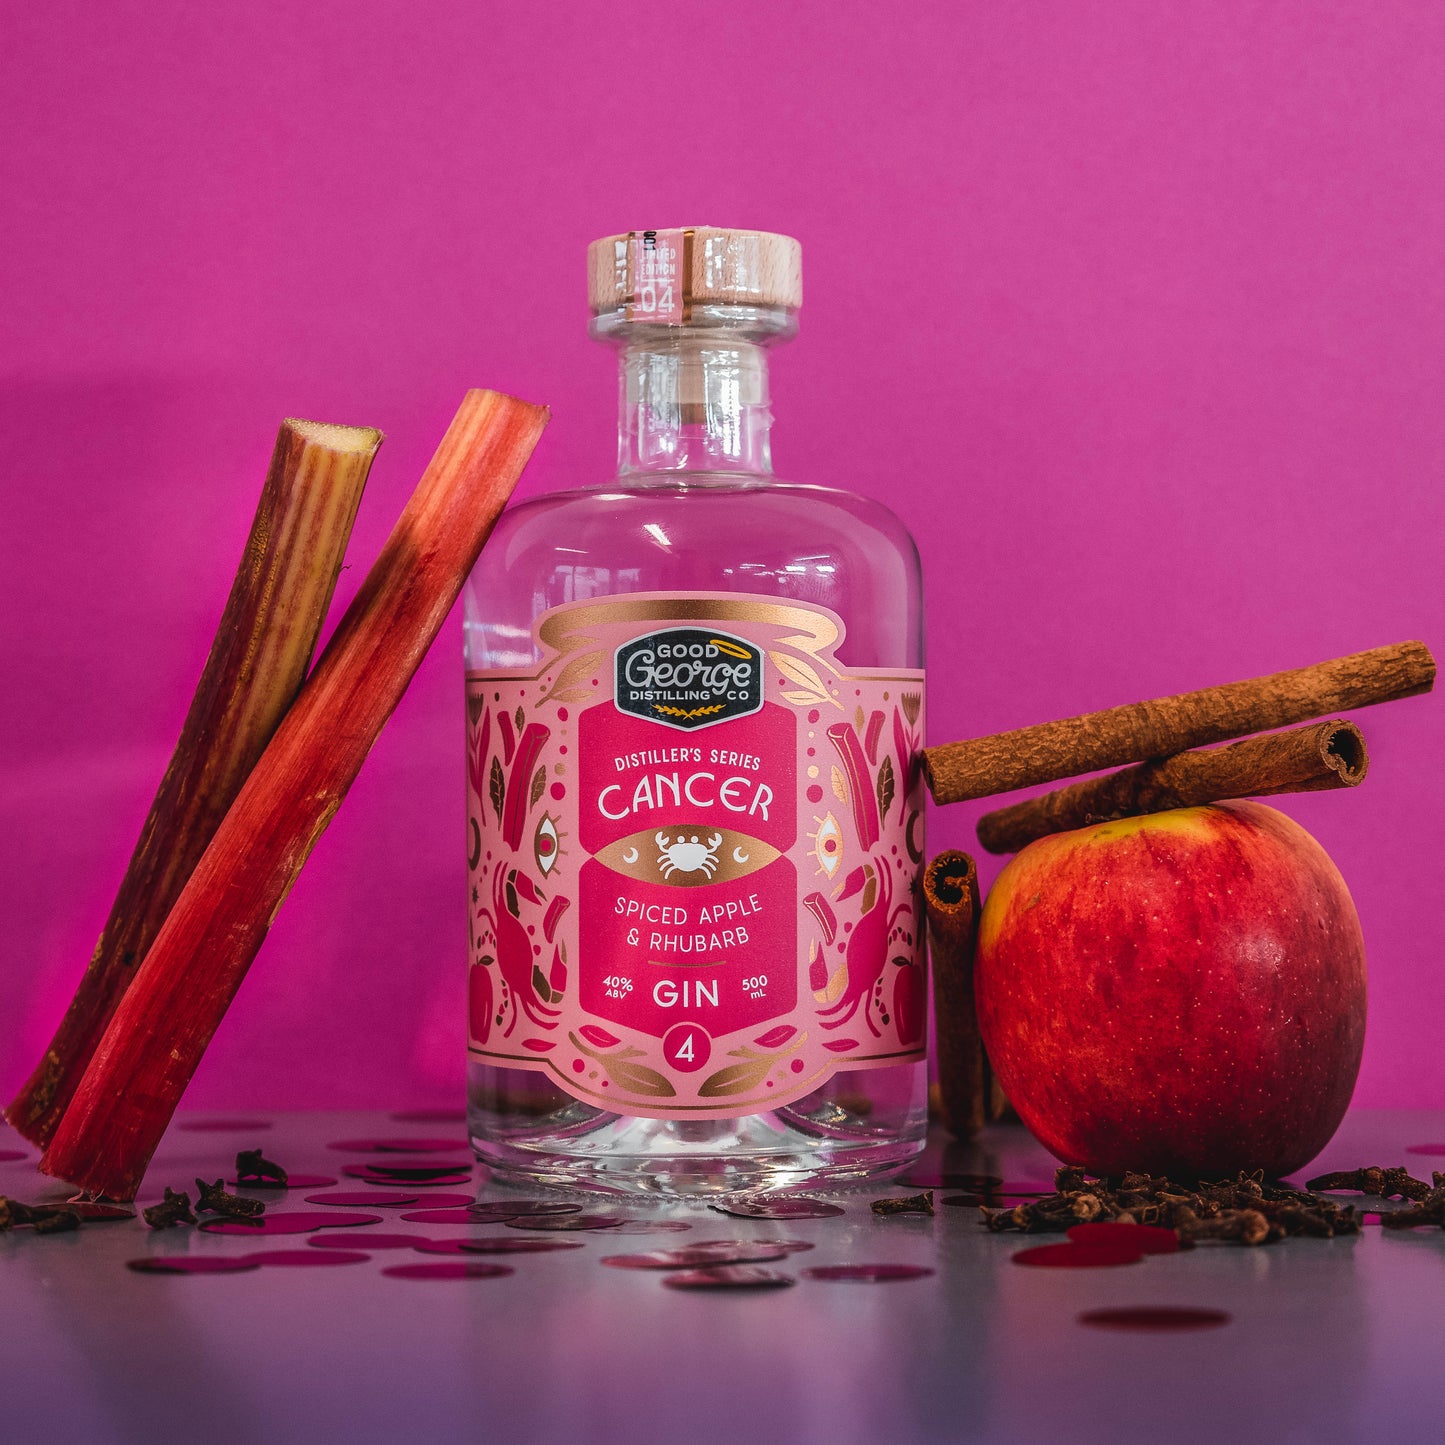 Cancer Spiced Apple and Rhubarb Gin